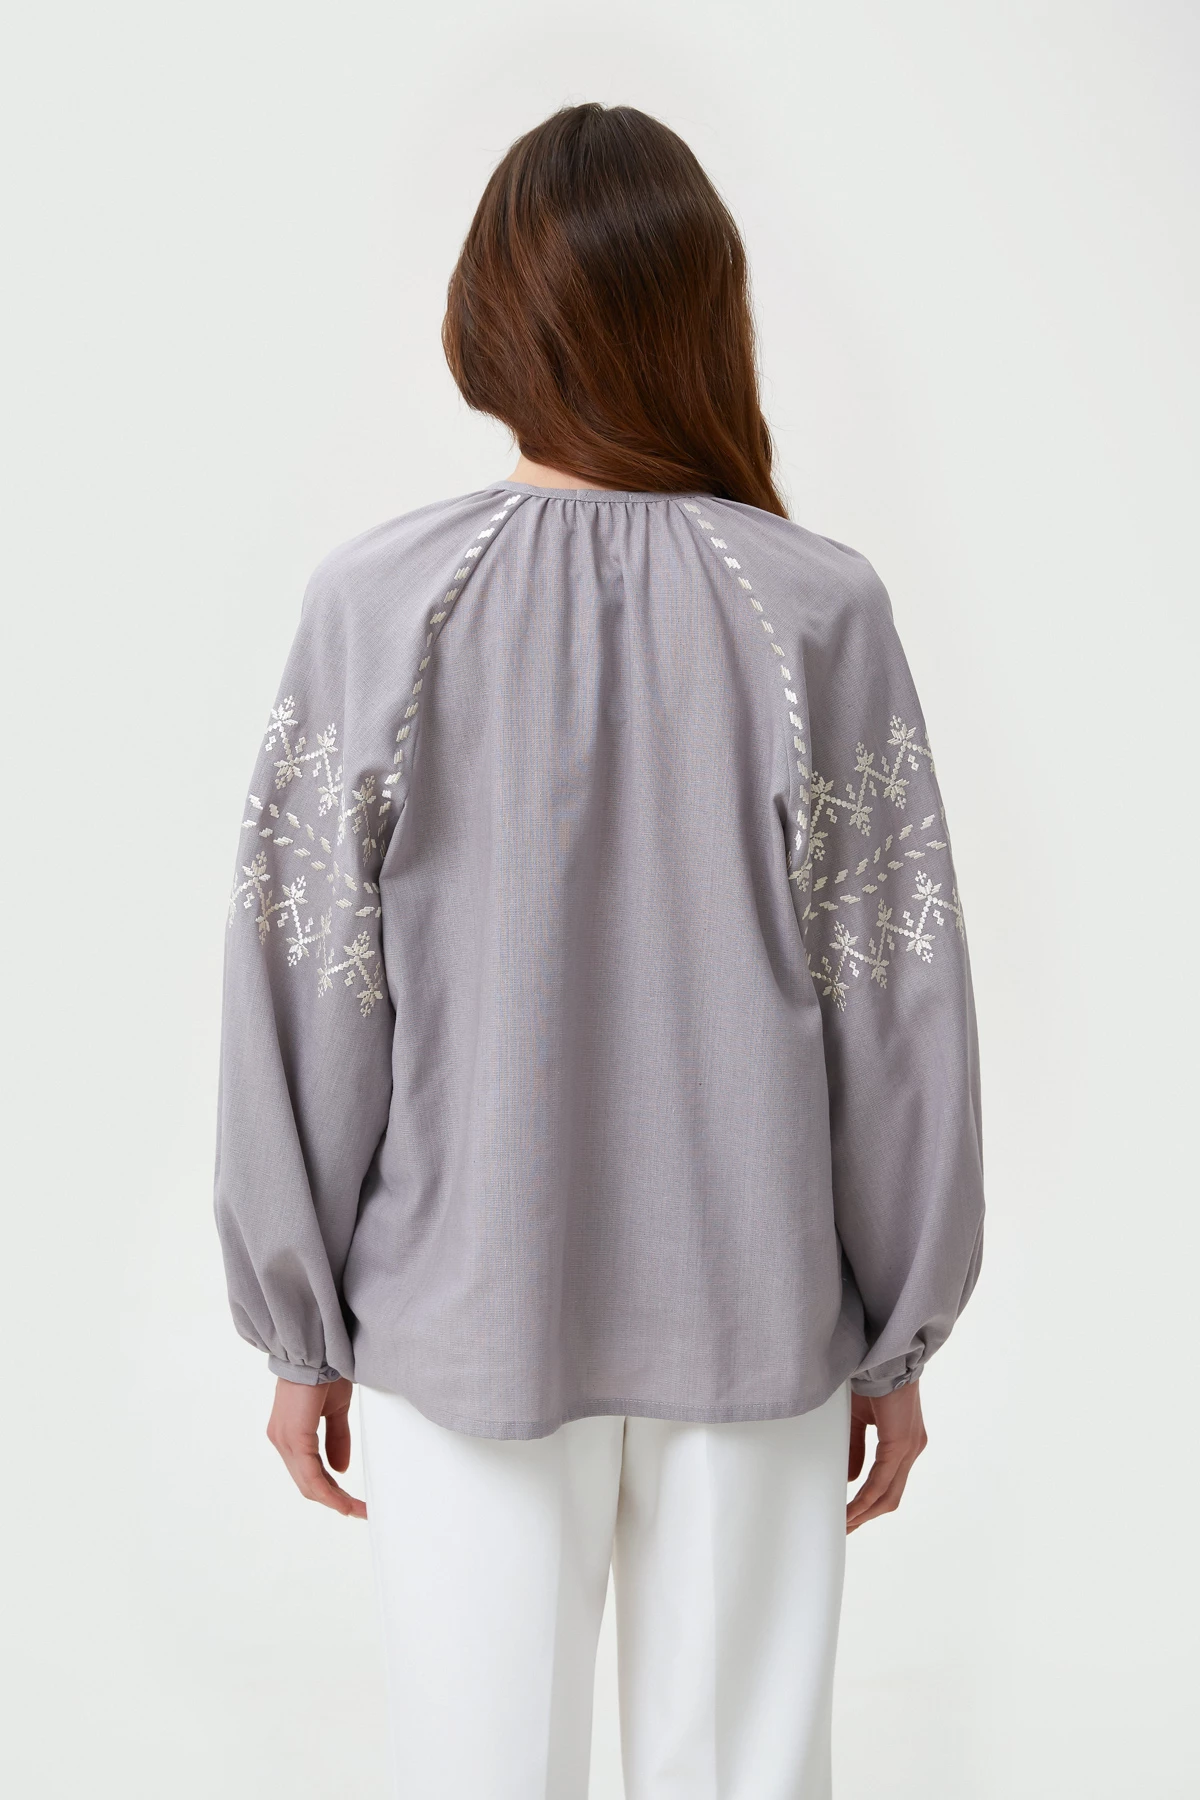 Grey linen vyshyvanka shirt with zigzags embroidery, photo 5